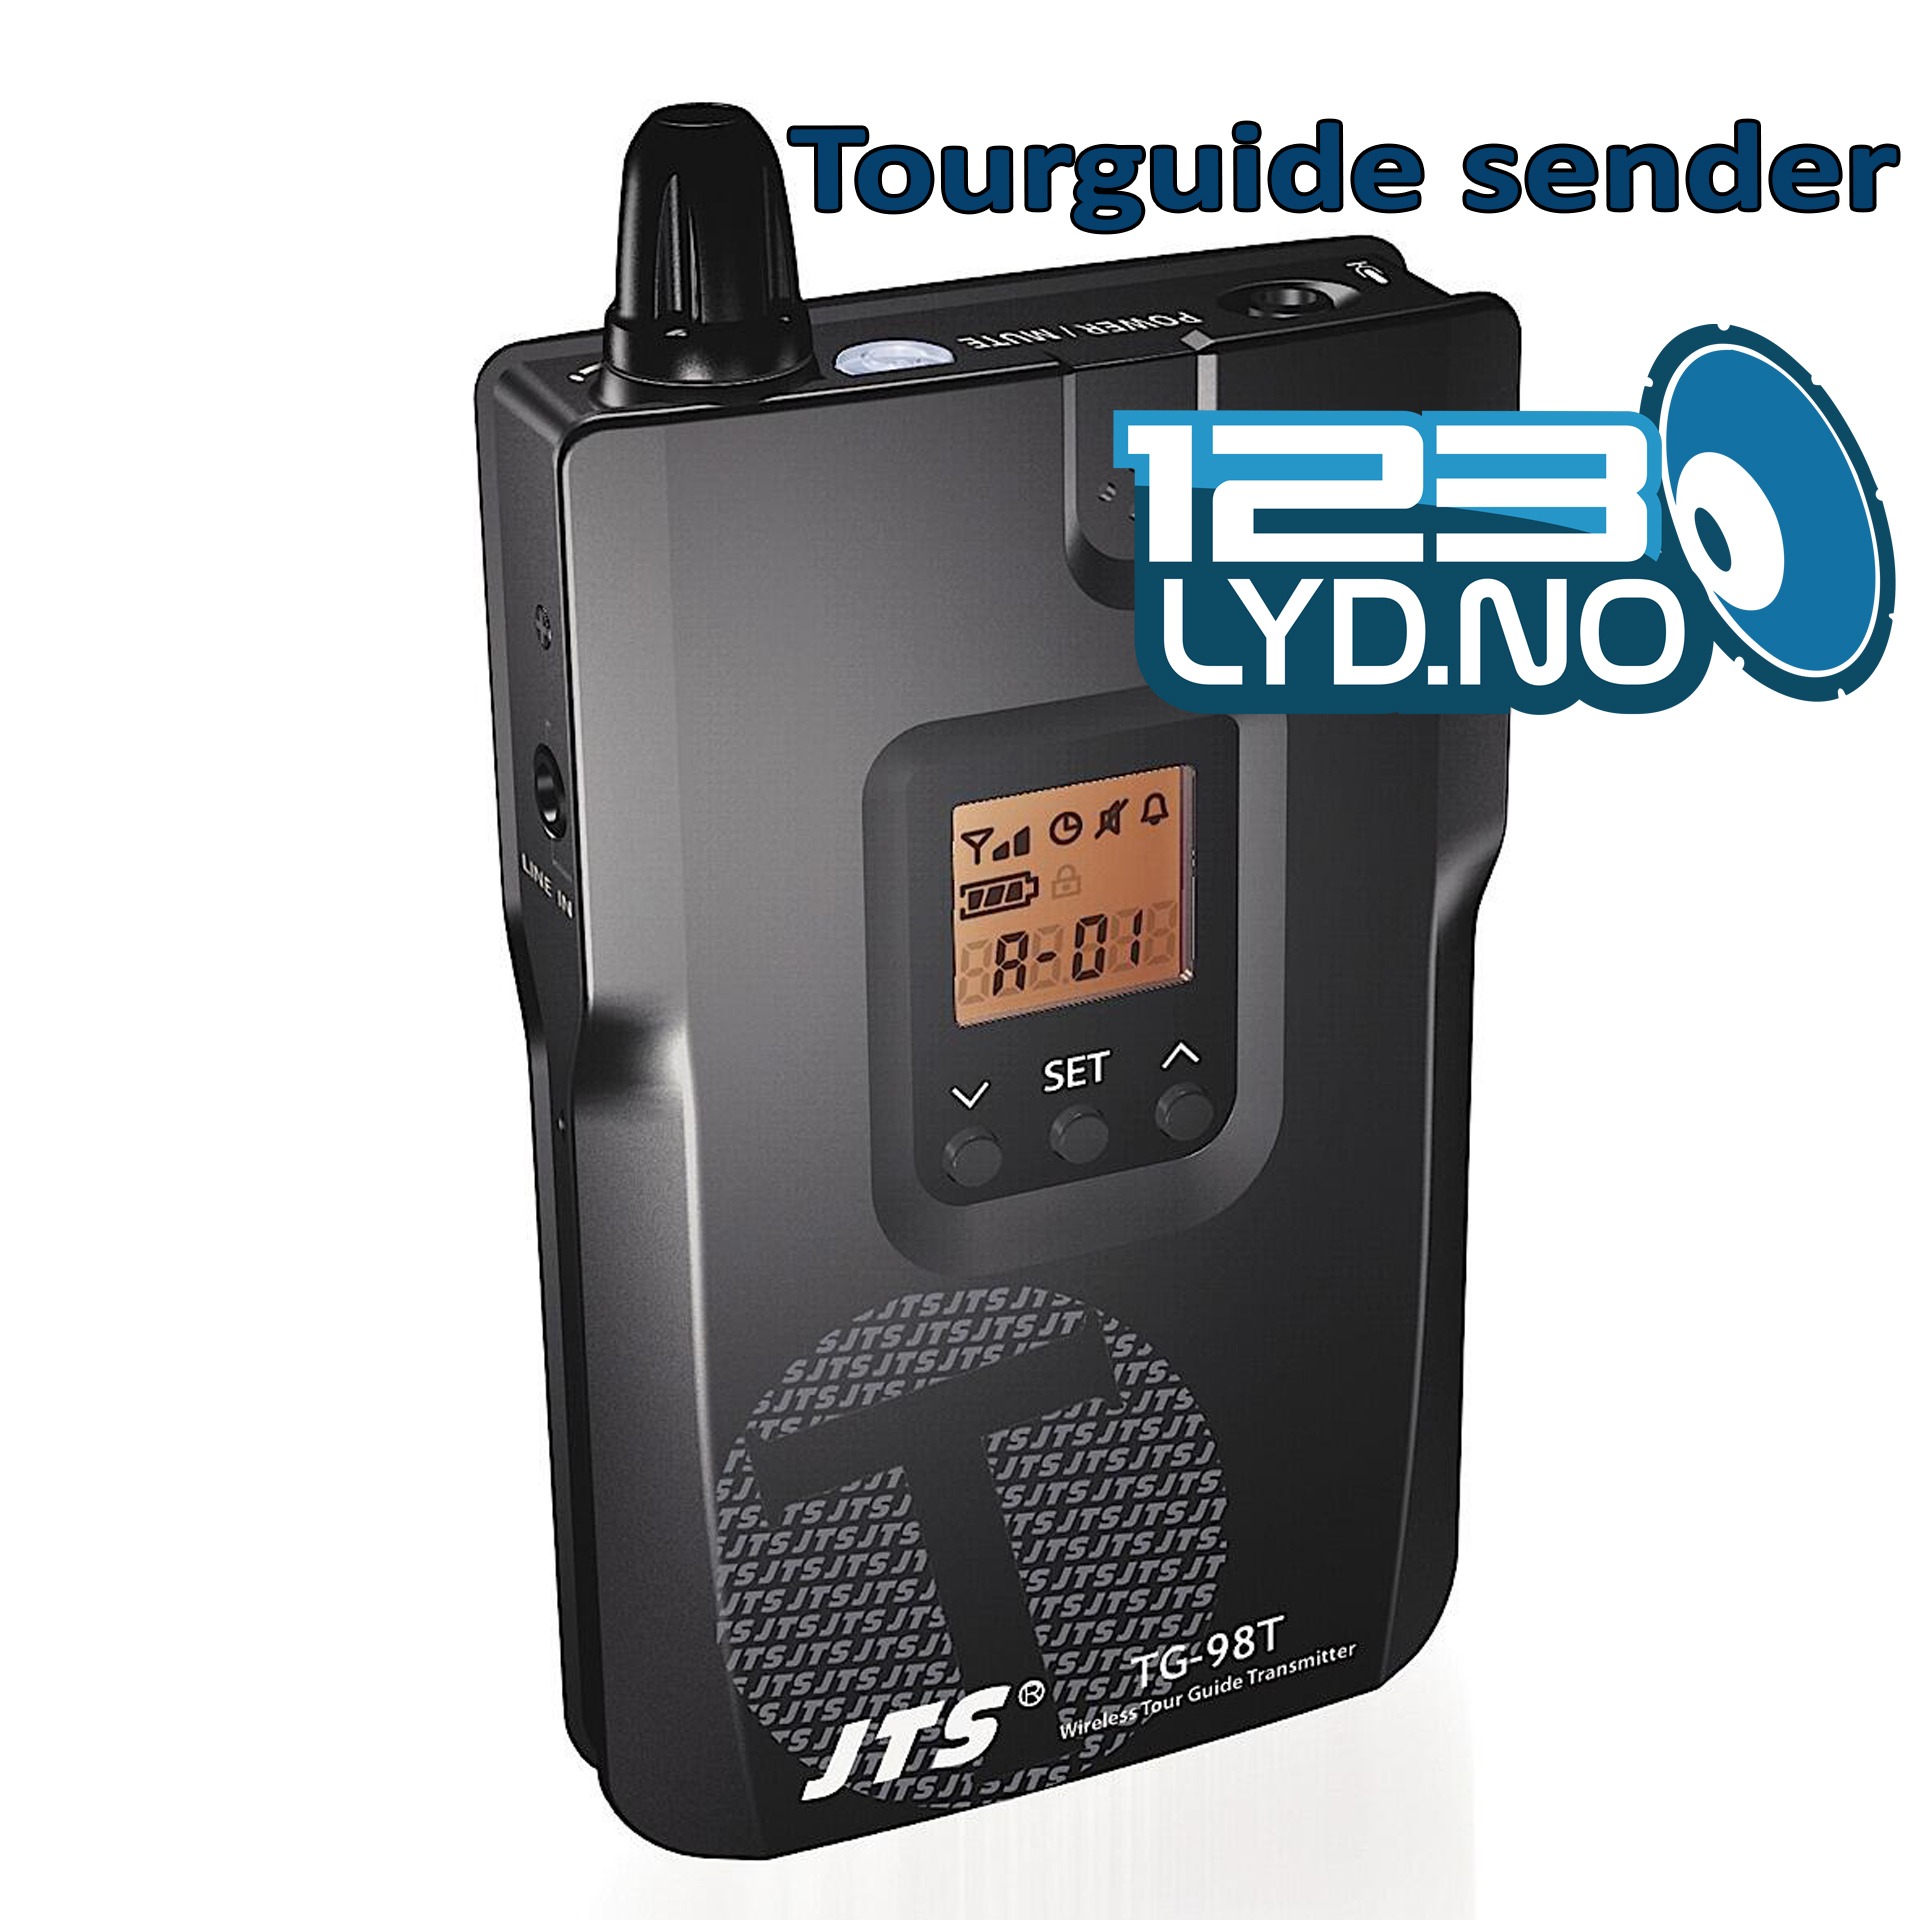 Tourguide Sender JTS TG-98T